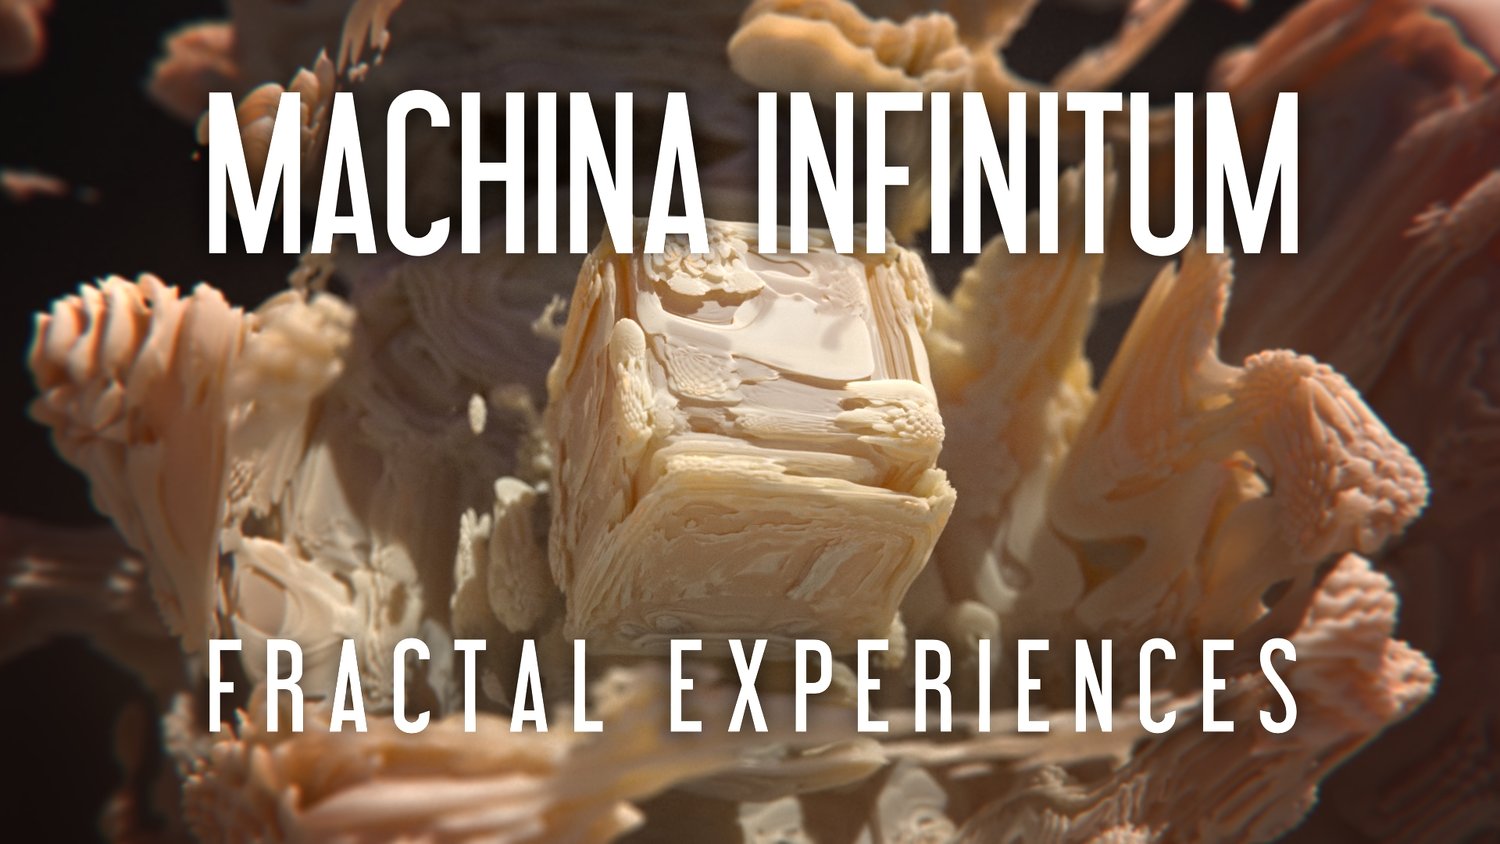 www.machina-infinitum.com